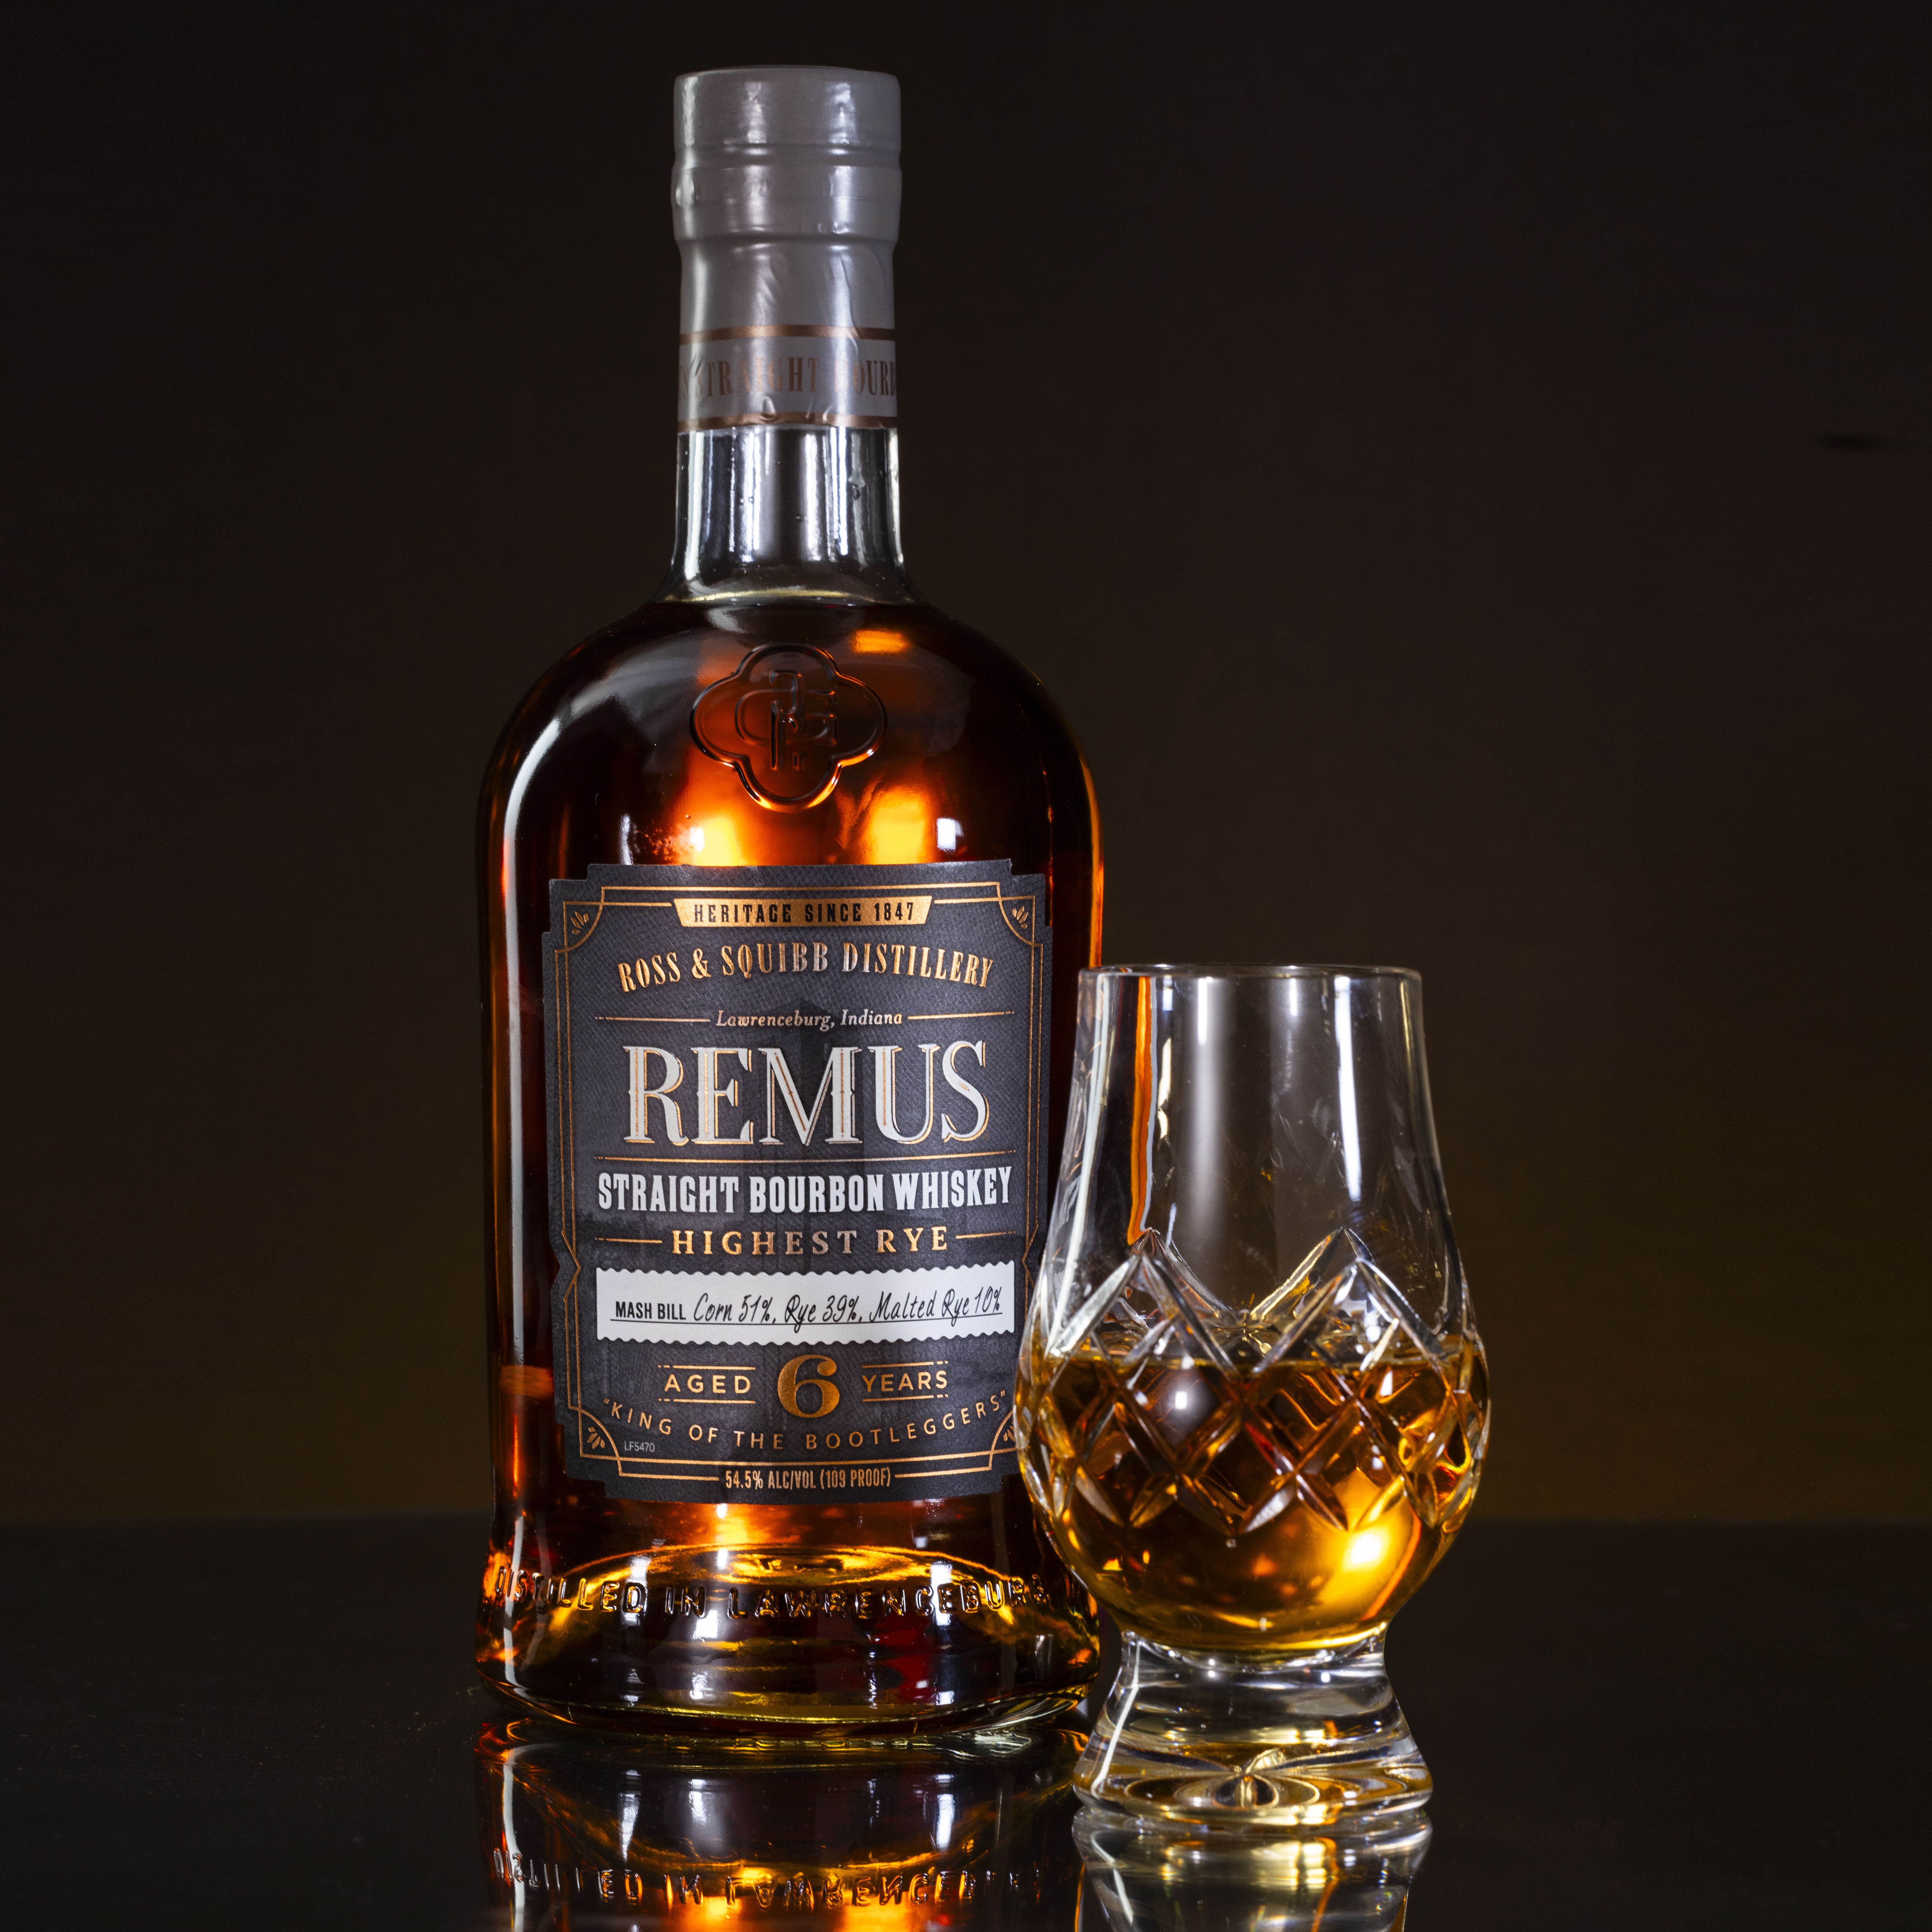 Remus Highest Rye Bourbon Leans Into Rye Heritage